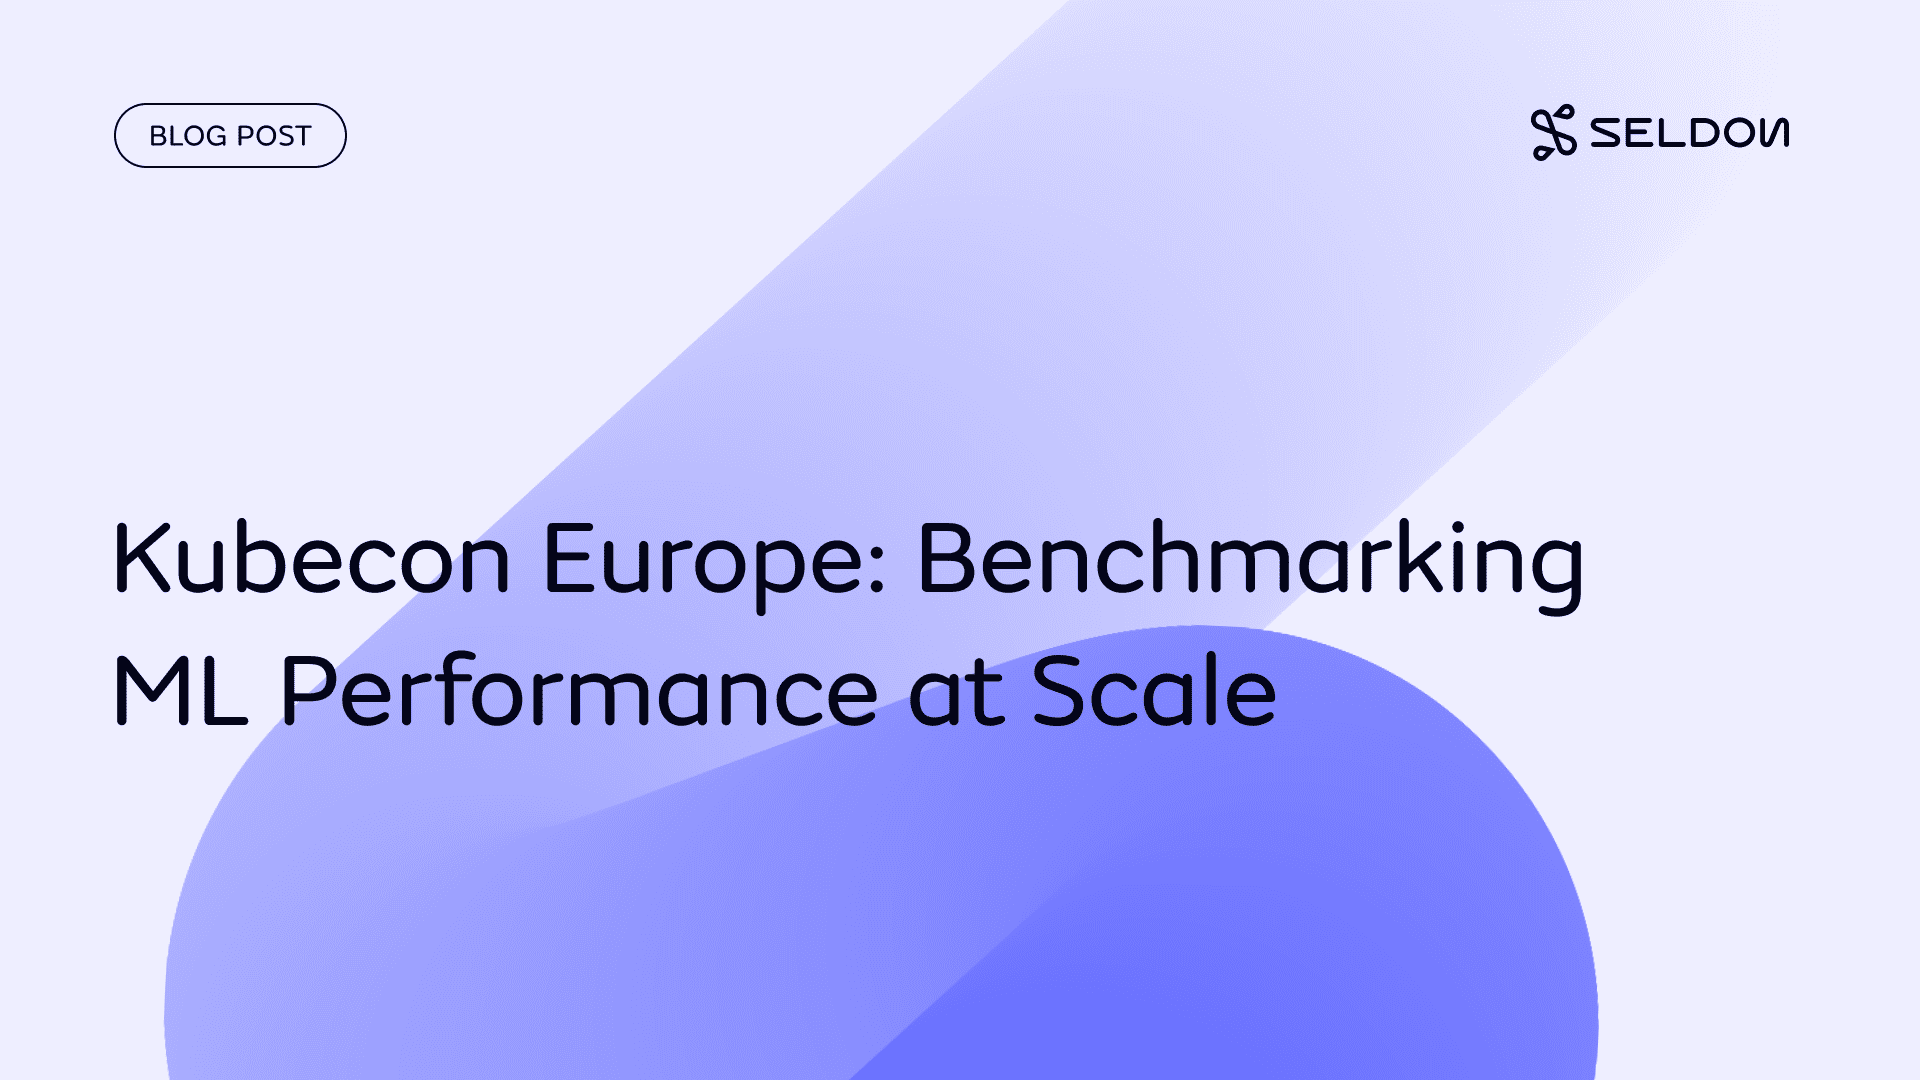 Kubecon Europe: Benchmarking machine learning performance at scale